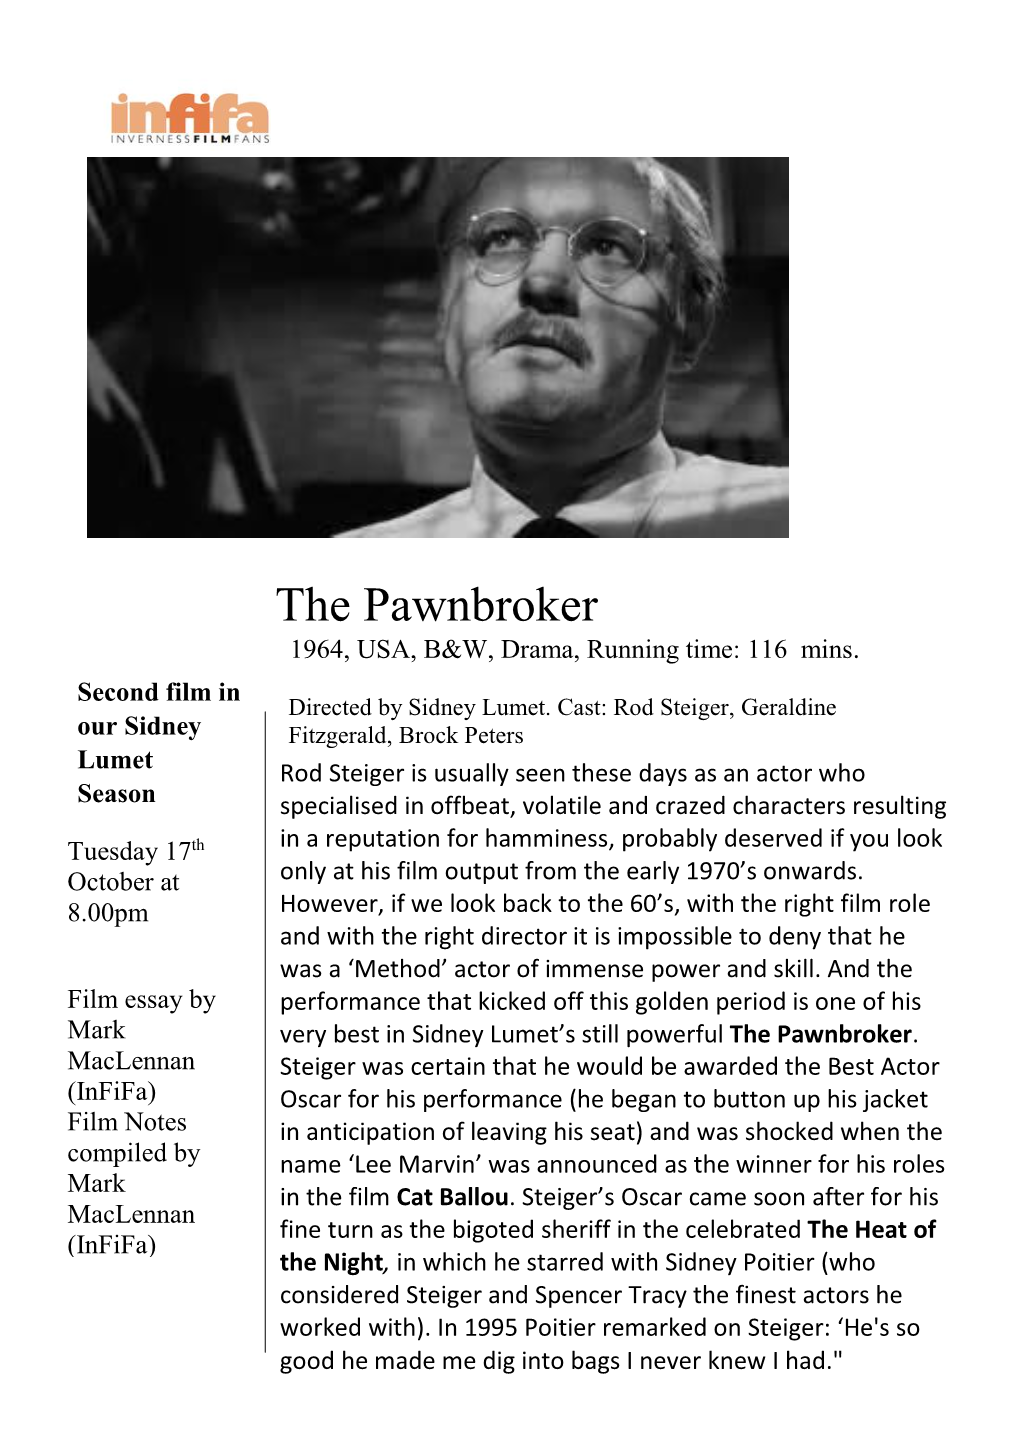 The Pawnbroker 1964, USA, B&W, Drama, Running Time: 116 Mins